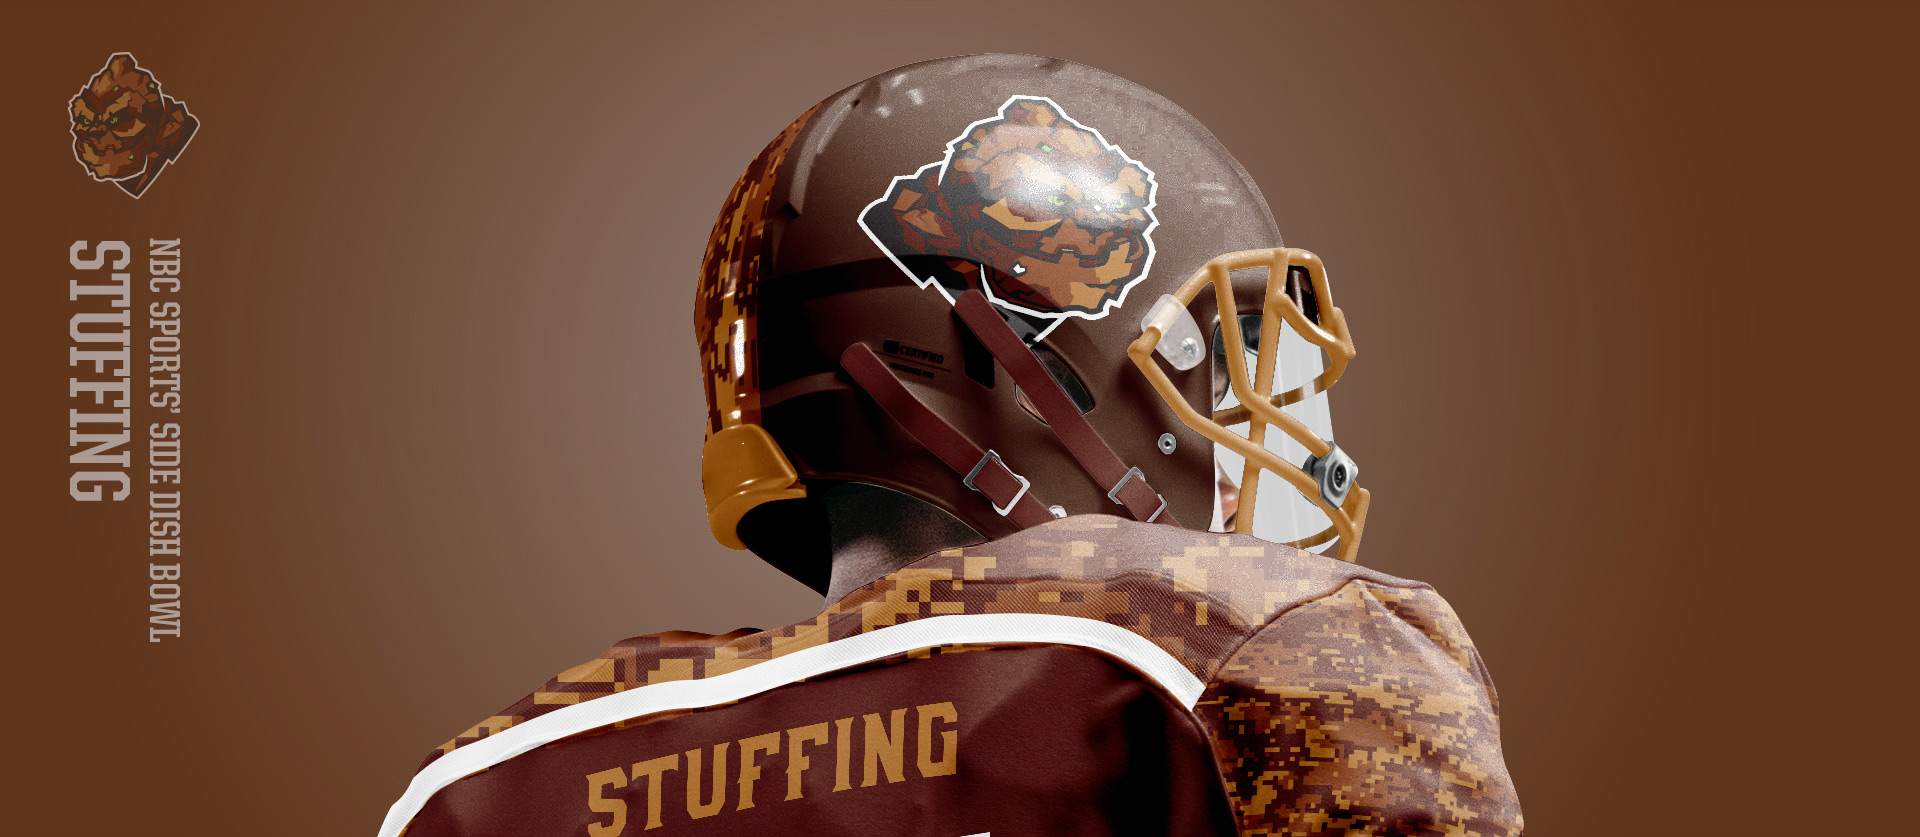 Stuffing Helmet Backside - Football Uniform Design for NBC Sports Thanksgiving Side Dish Bowl